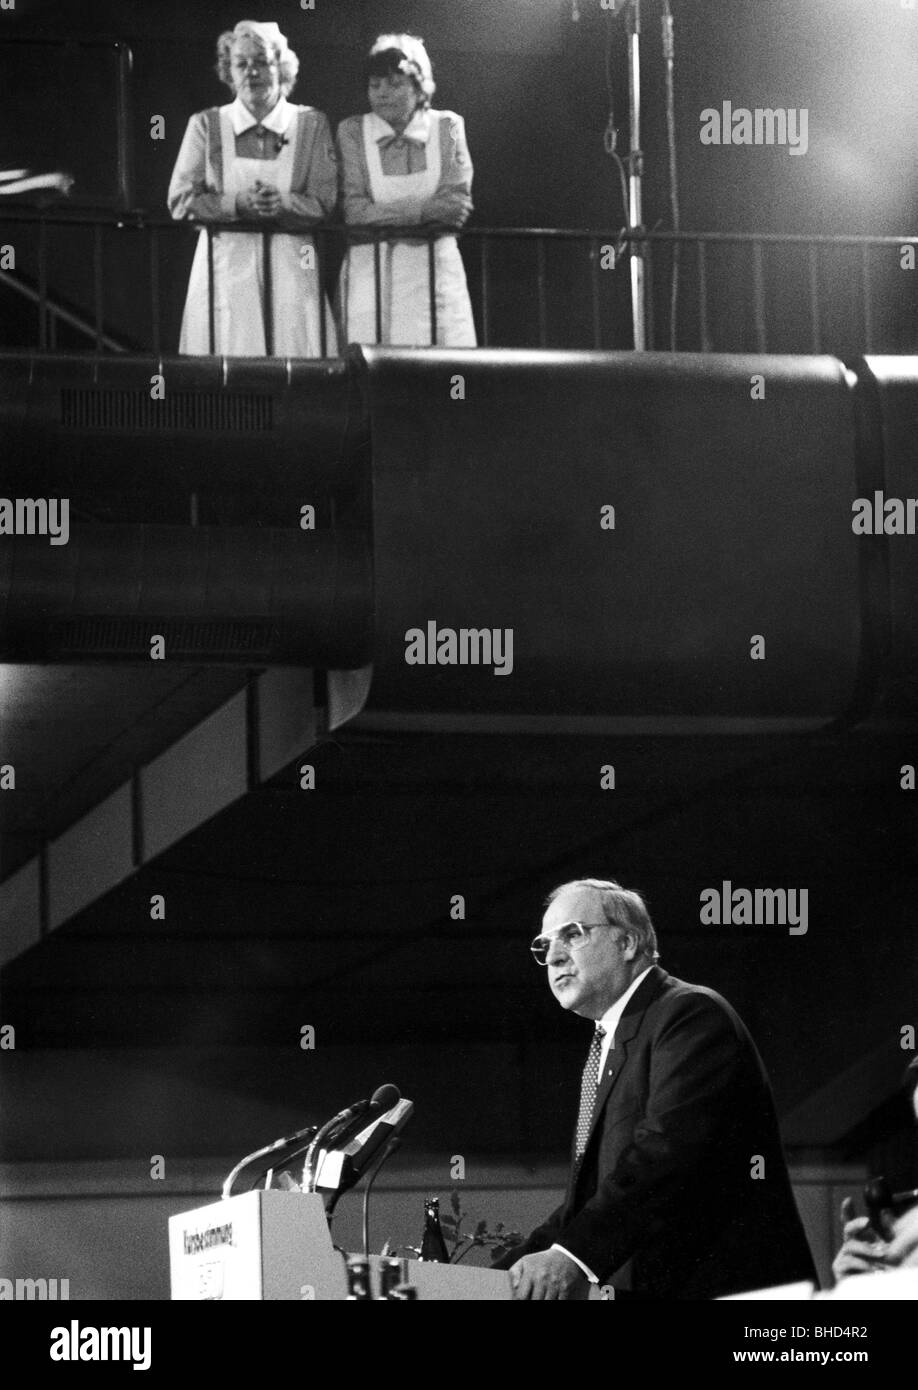 Kohl, Helmut, * 3.4.1930, German politician (CDU), Federal Chancellor 4.10.1982 - 26.10.1998, speech at the CSU Party rally, Munich, 19.- 20.10.1984, , Stock Photo